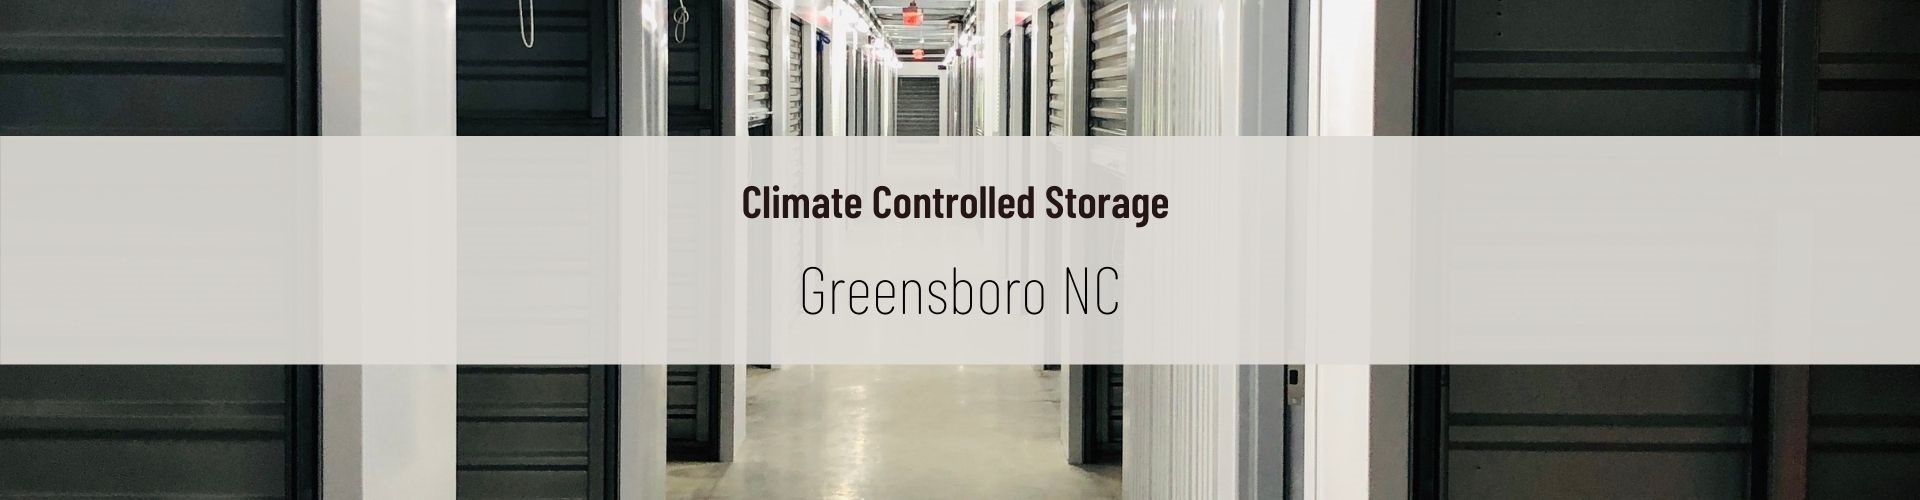 Climate Controlled Storage Greensboro NC